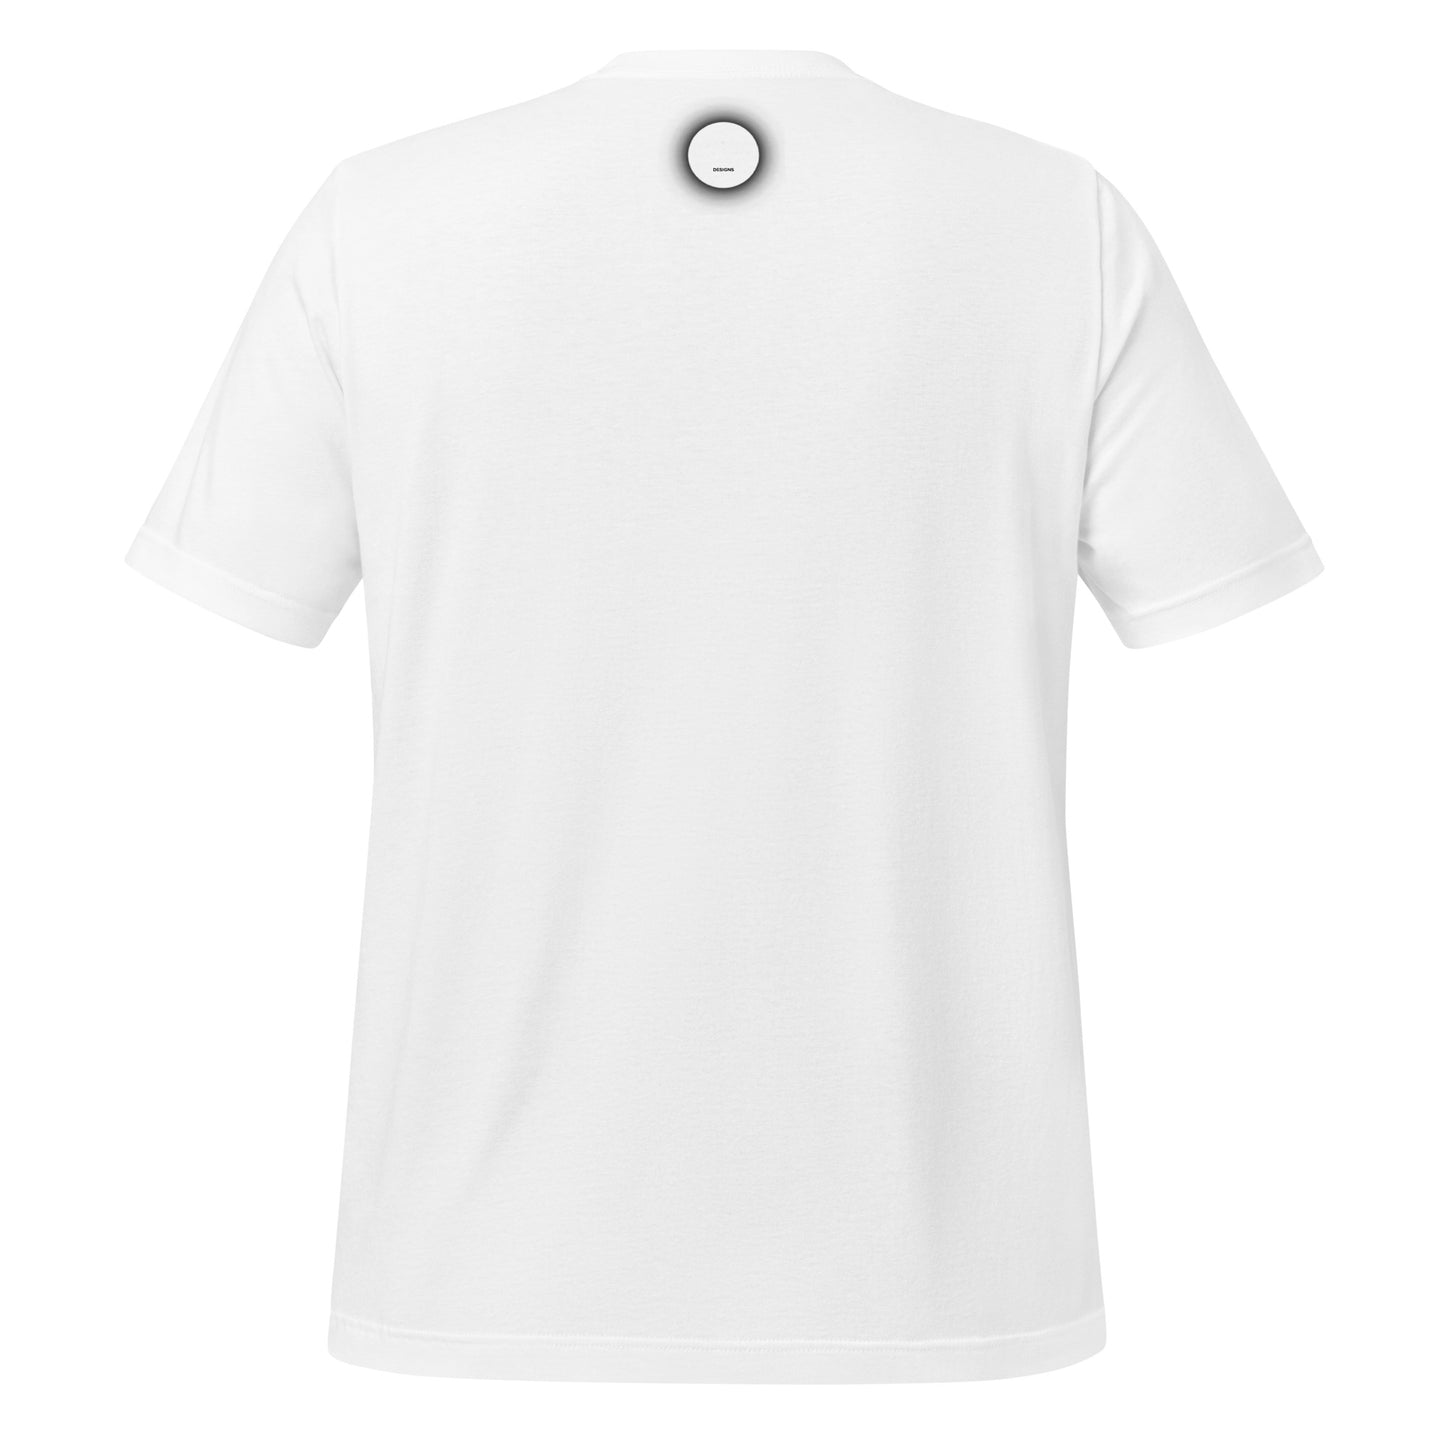 The Rawest Unisex T-Shirt